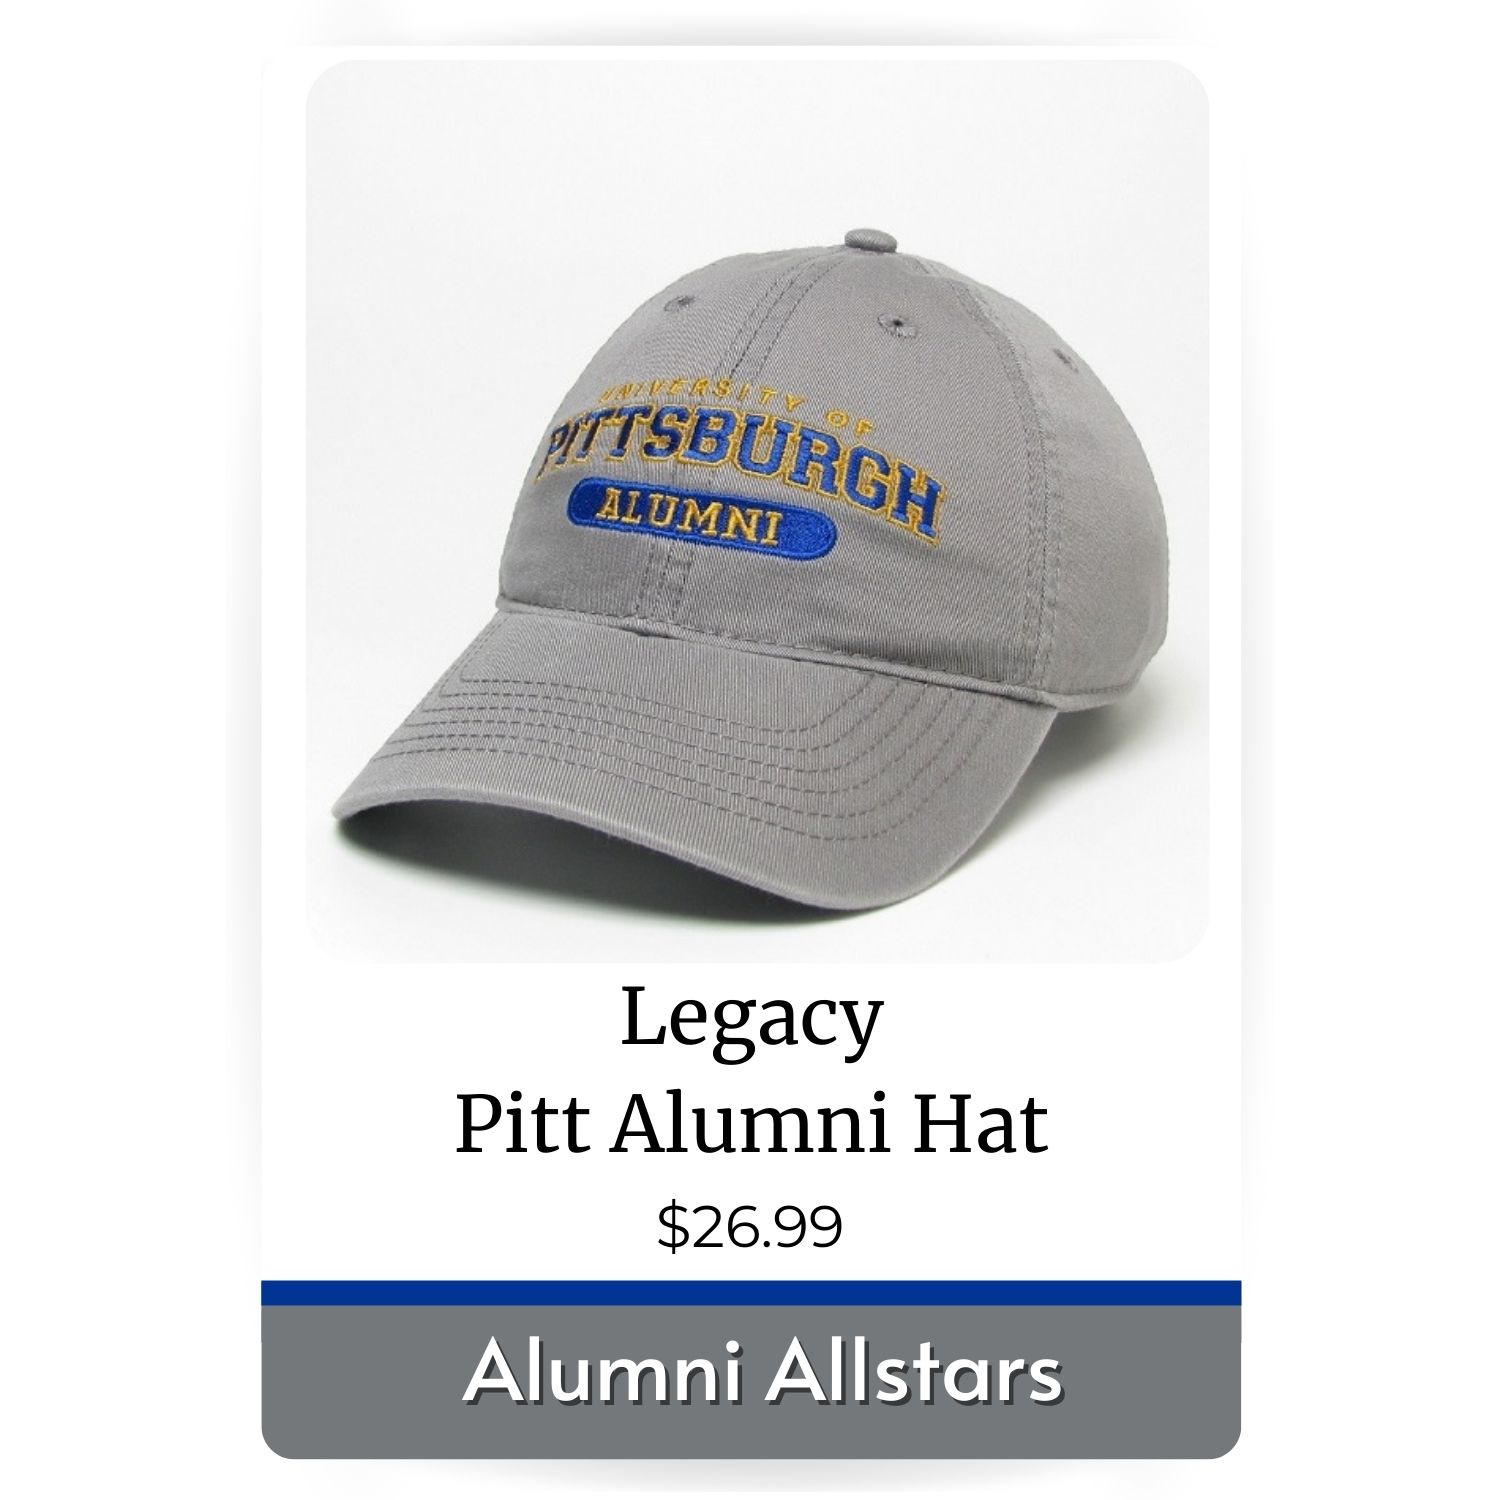 Legacy Pitt Alumni Hat image